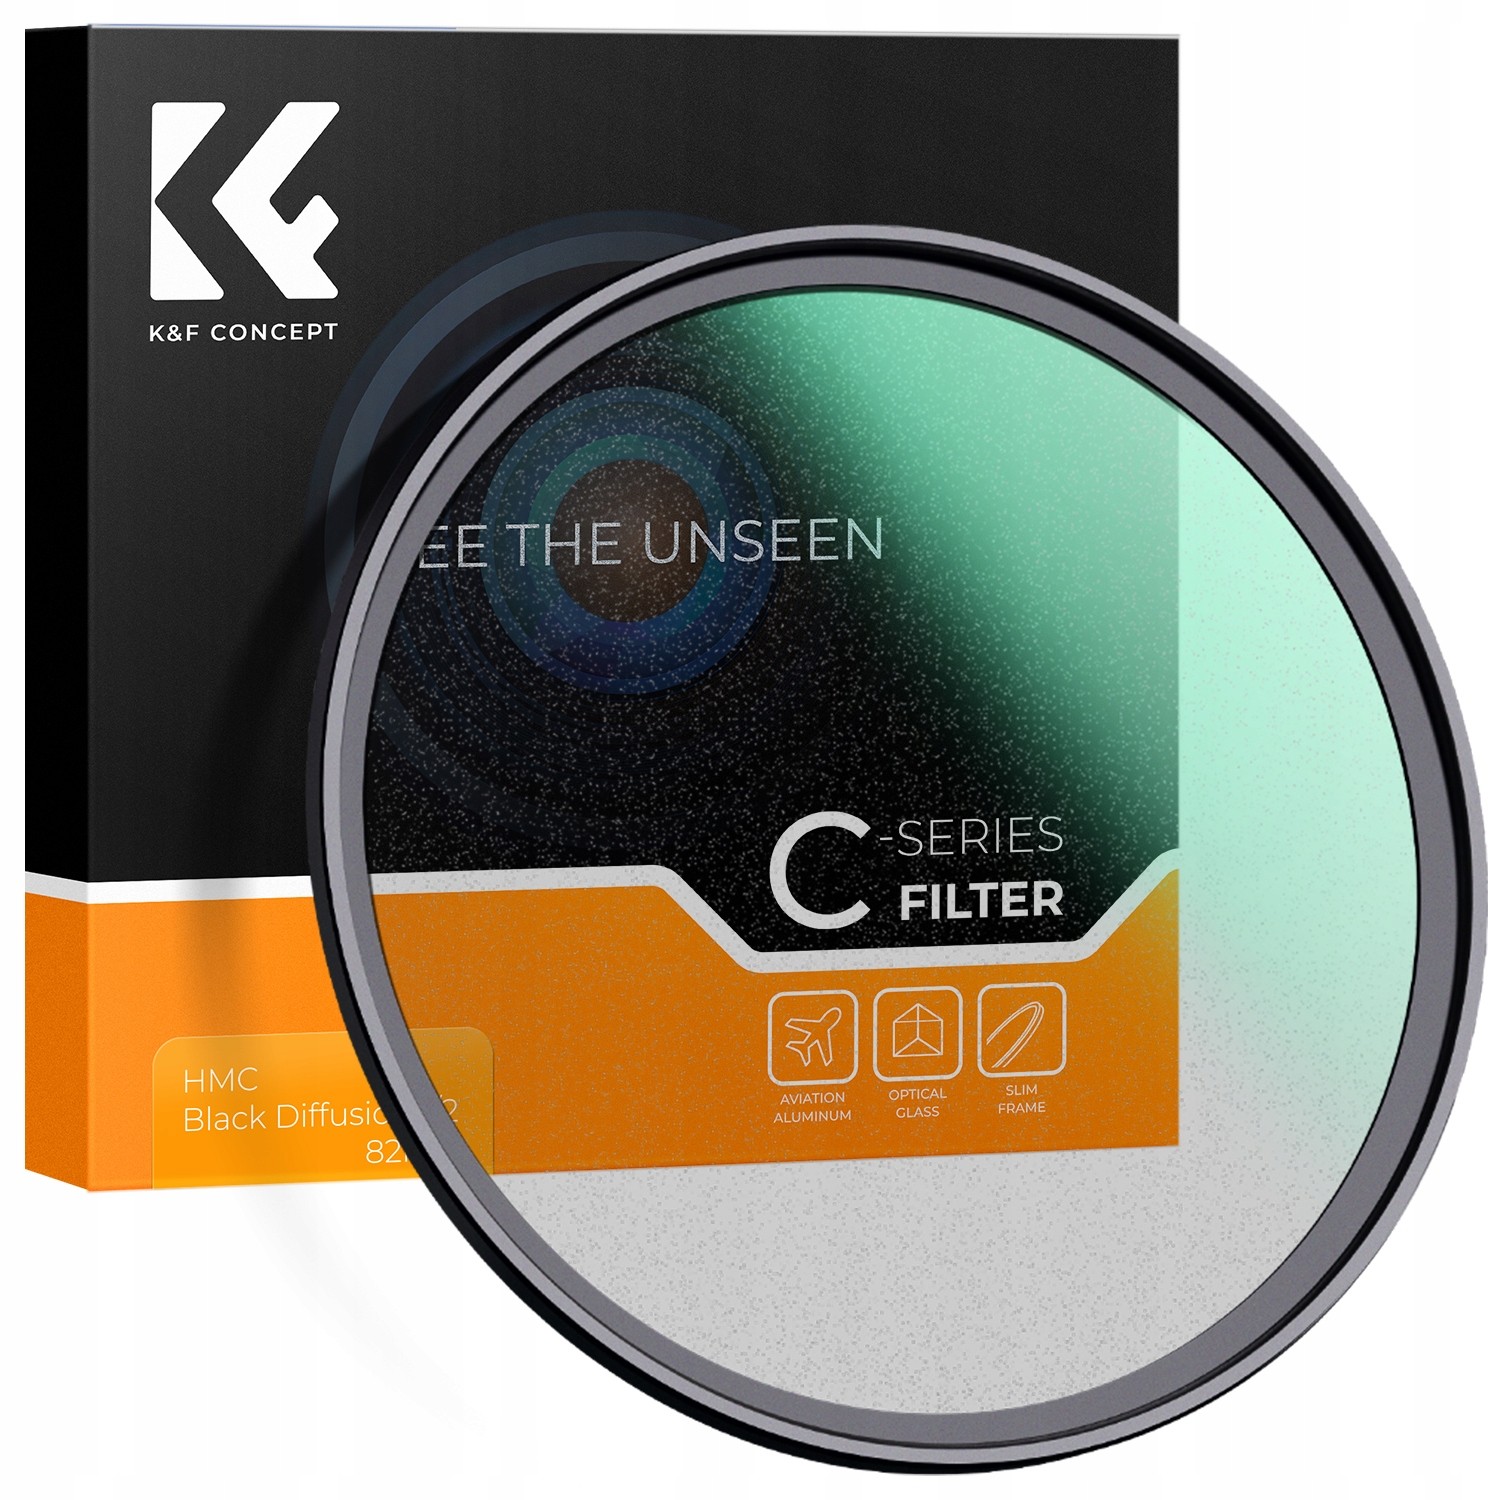 Difuzní filtr Black Mist 1/2 49mm Nano-C K&f